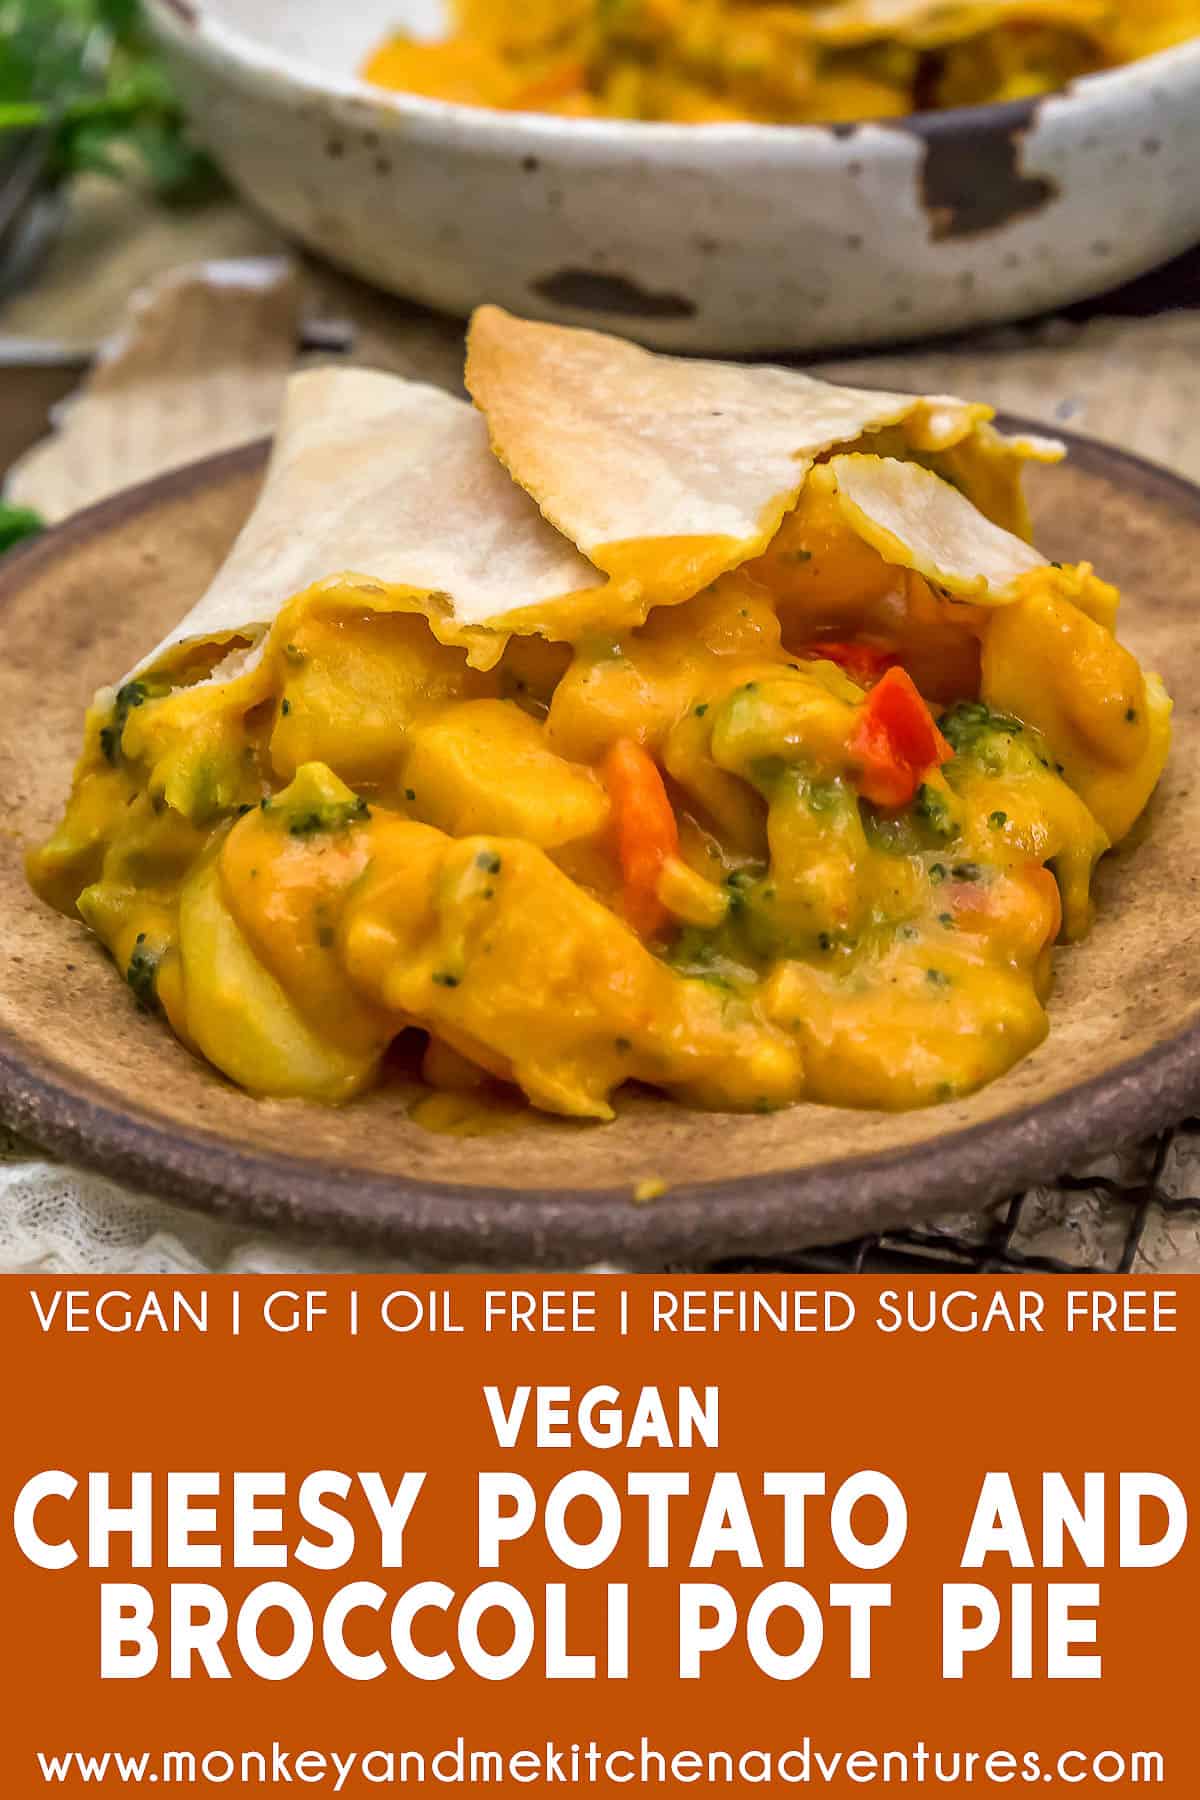 Vegan Cheesy Potato and Broccoli Pot Pie with Text Description